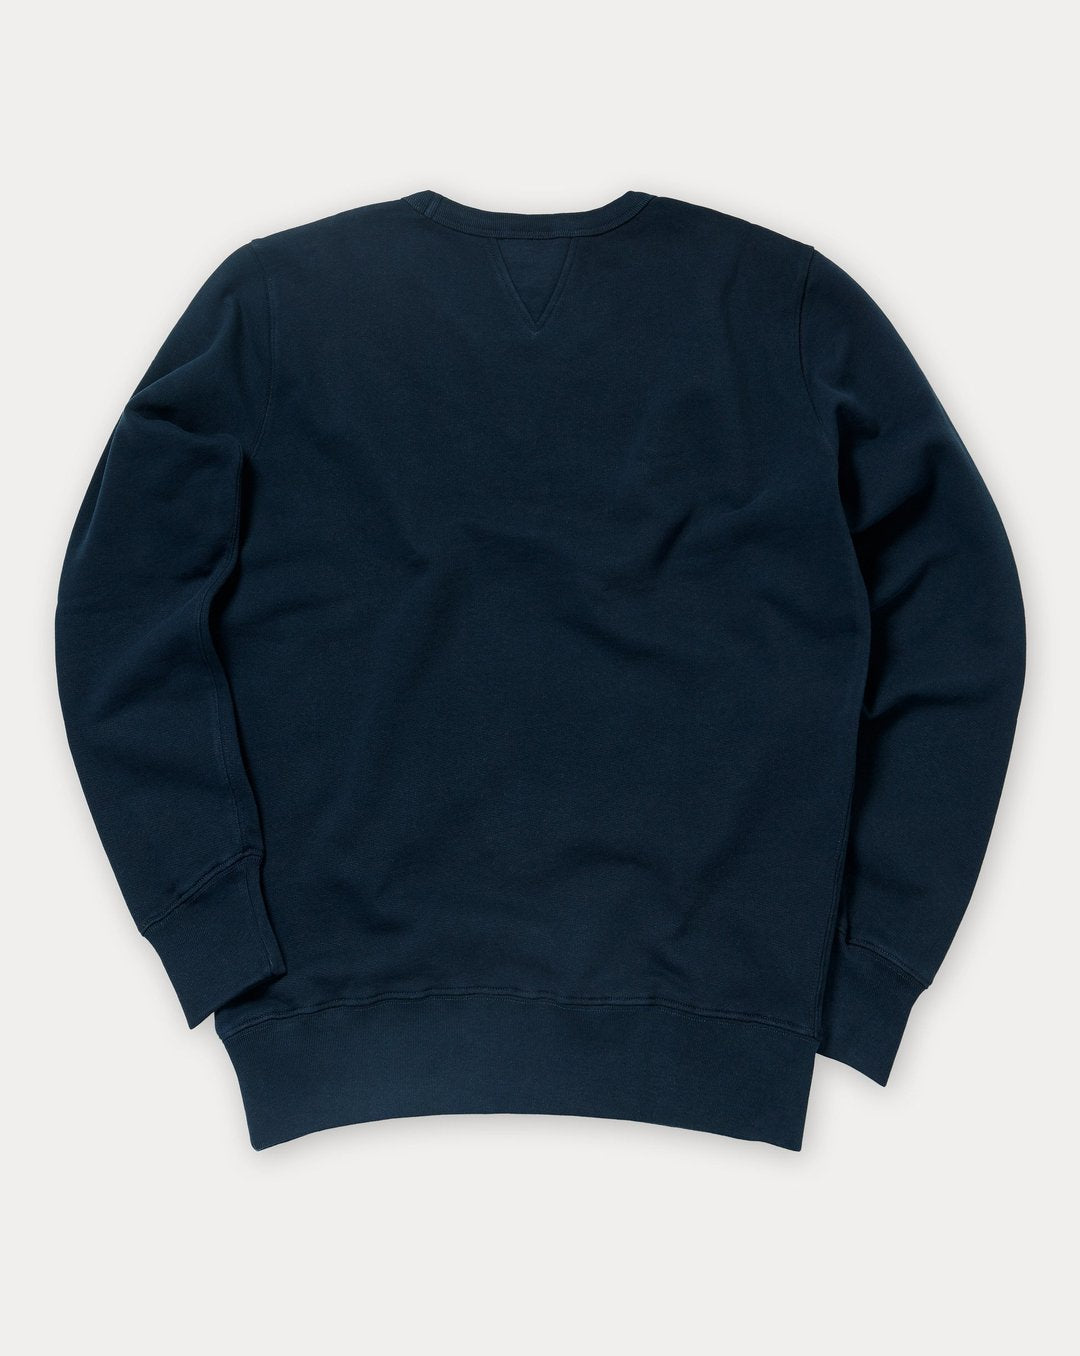 ERSTWHILE Sweatshirt Waaier - Marineblau